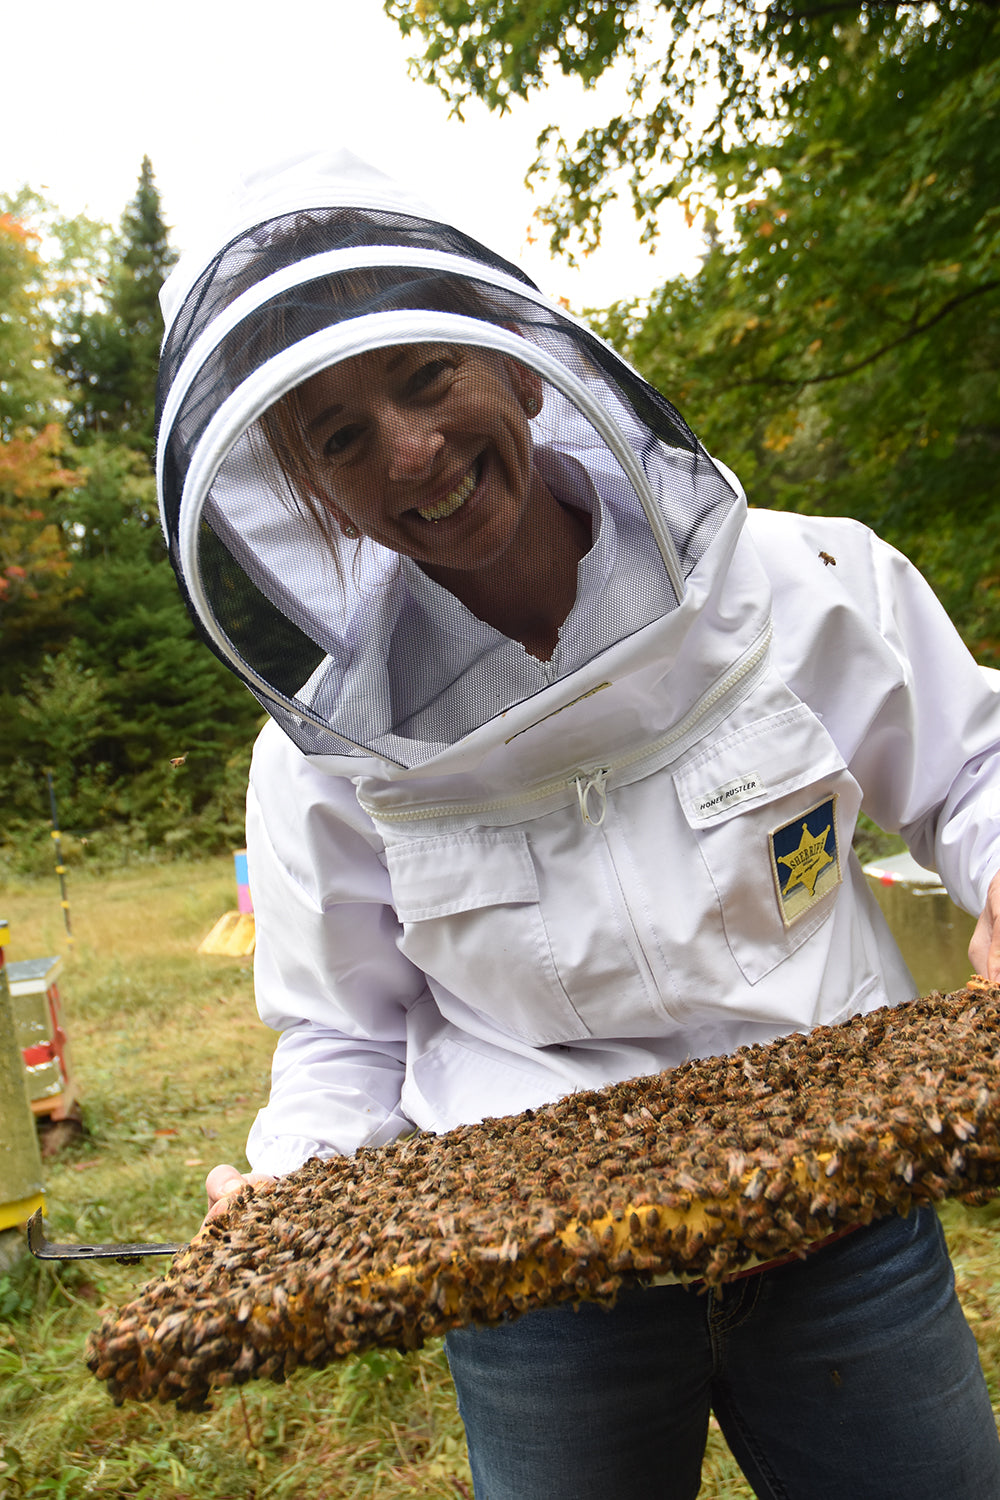 Visite agrotouristique aux ruches